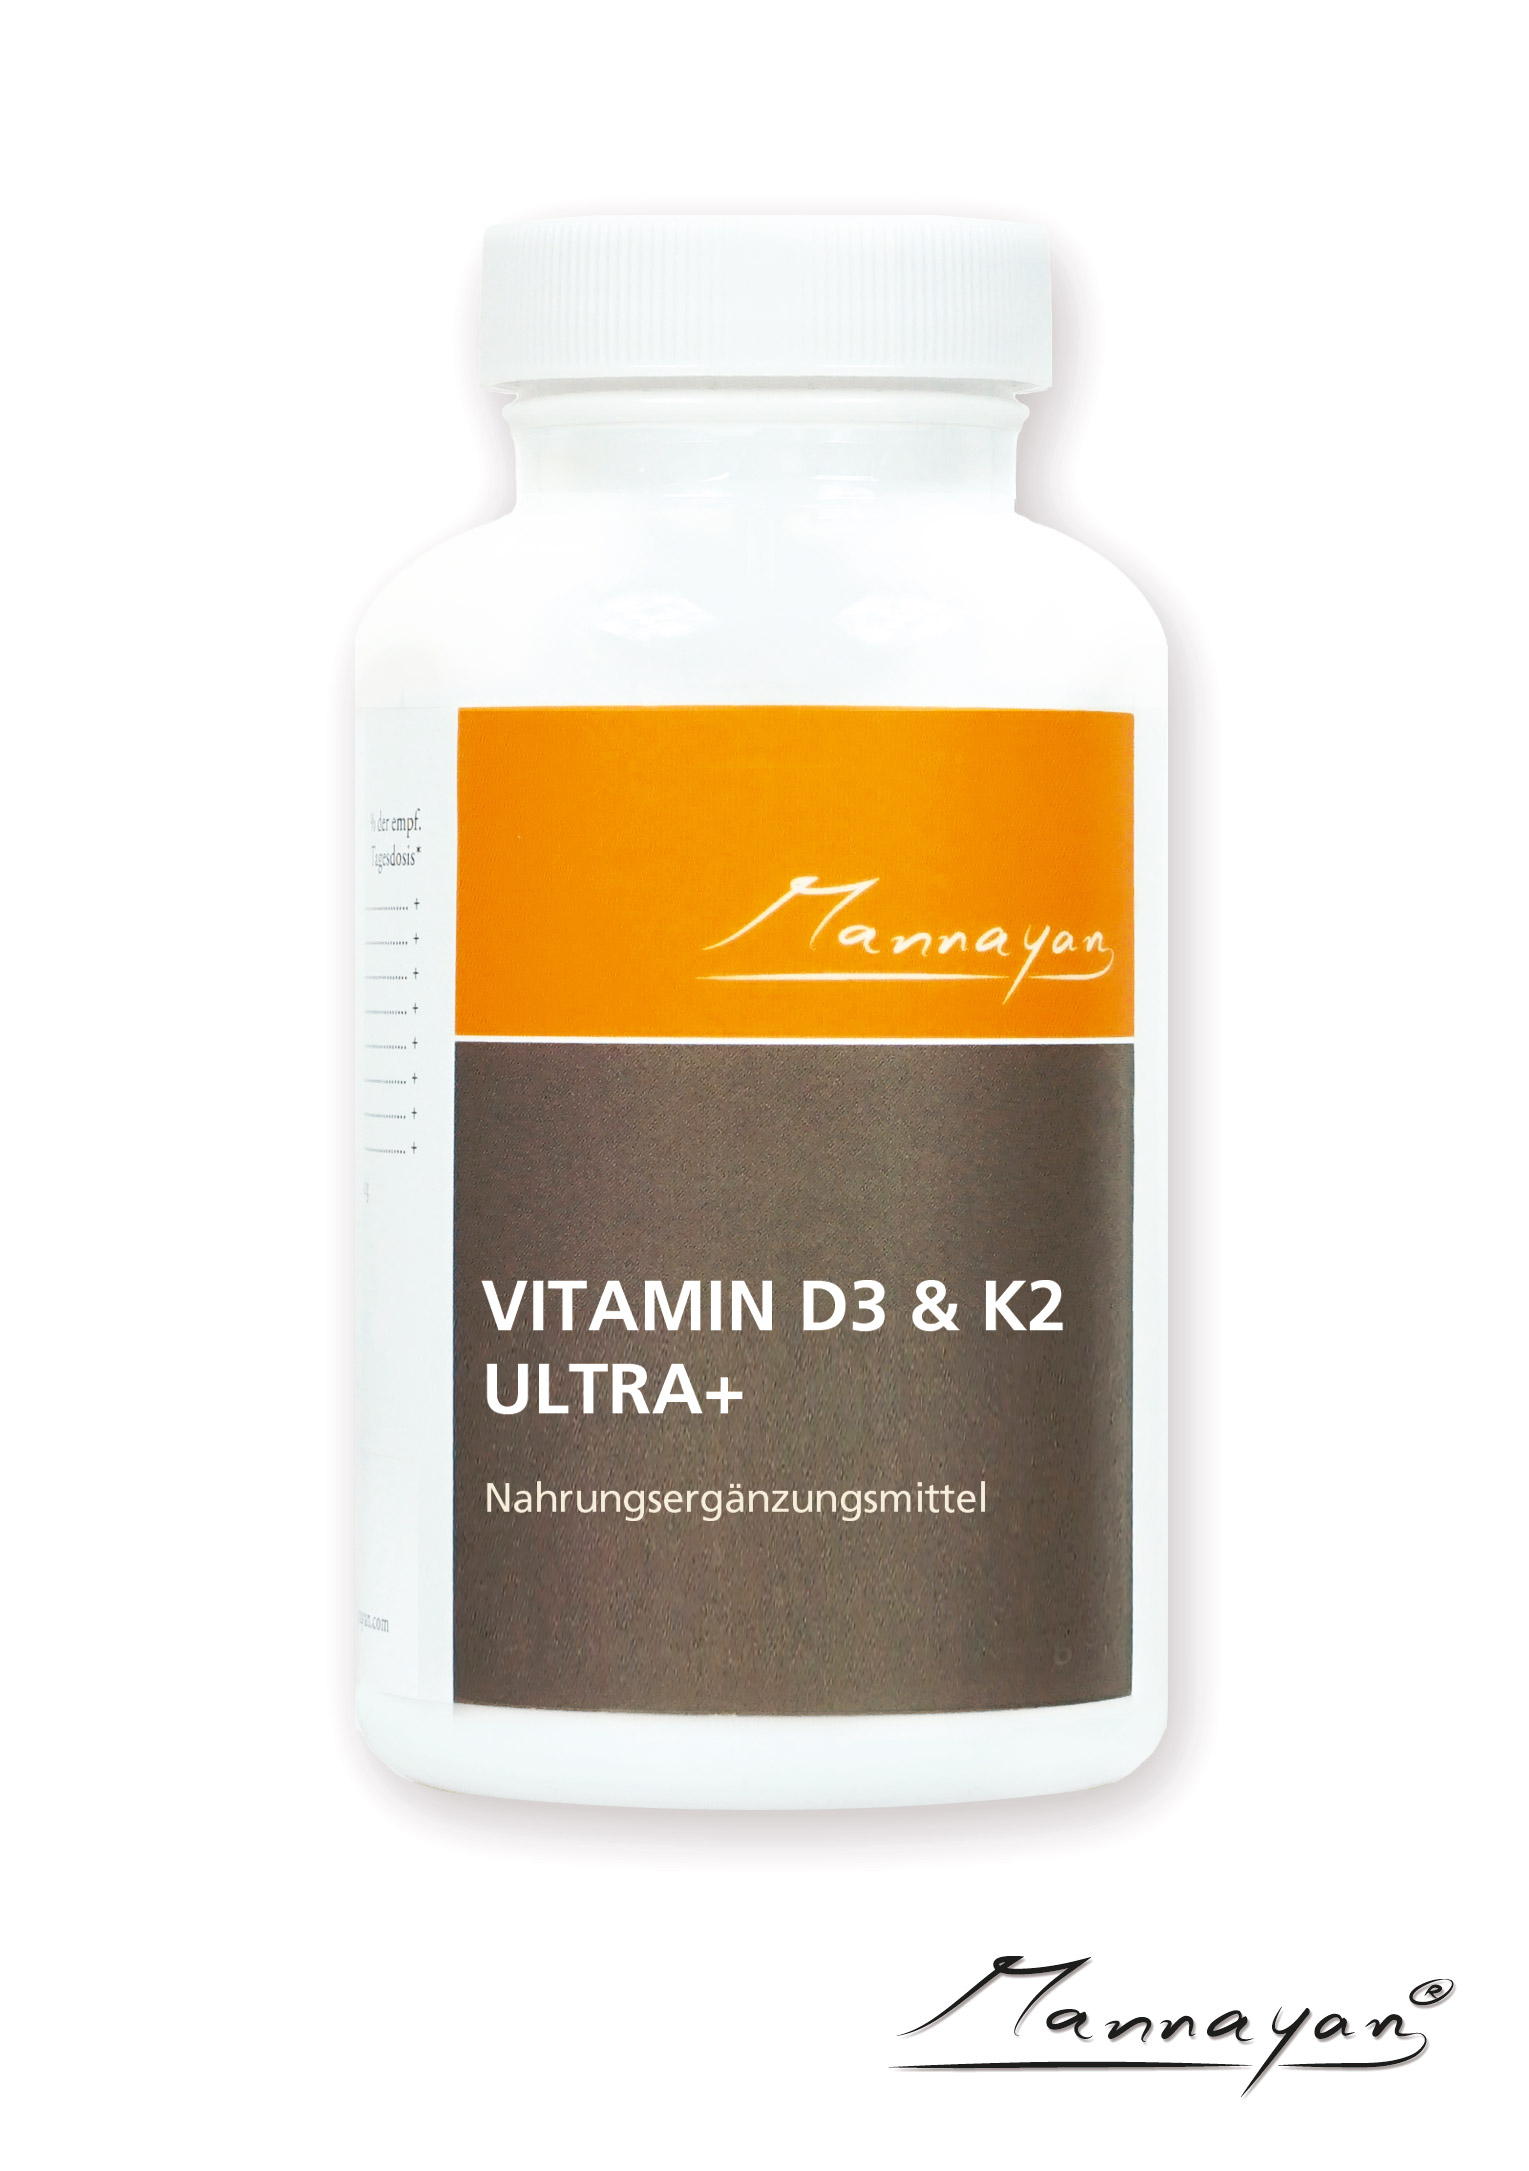 Mannayan VITAMINE D3 & K2 Ultra + (60 capsules)